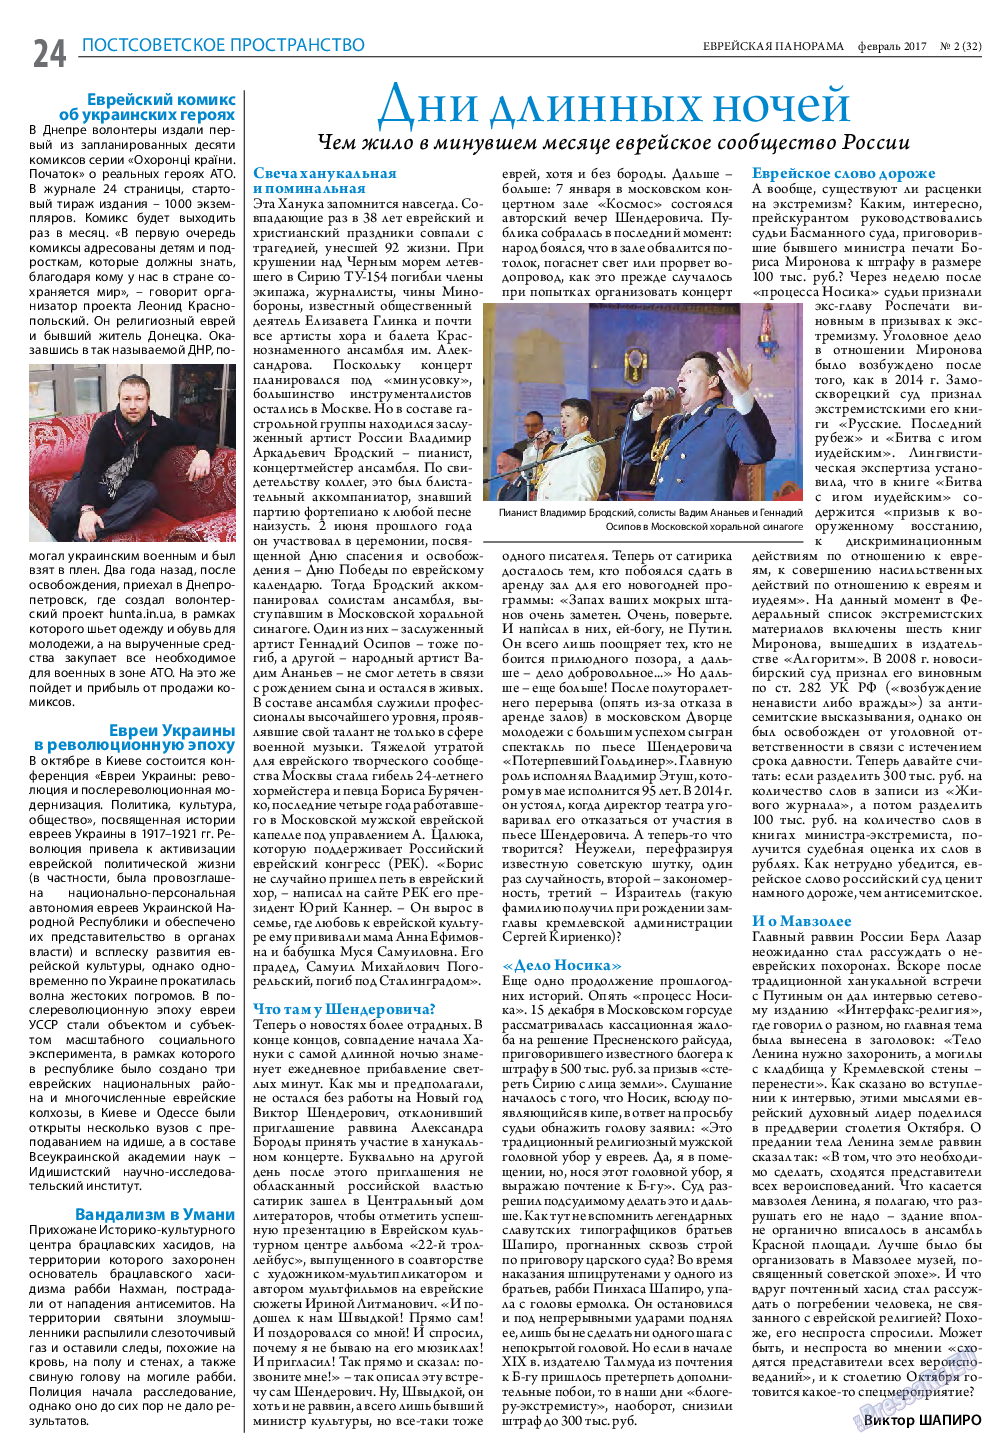 Еврейская панорама, газета. 2017 №2 стр.24